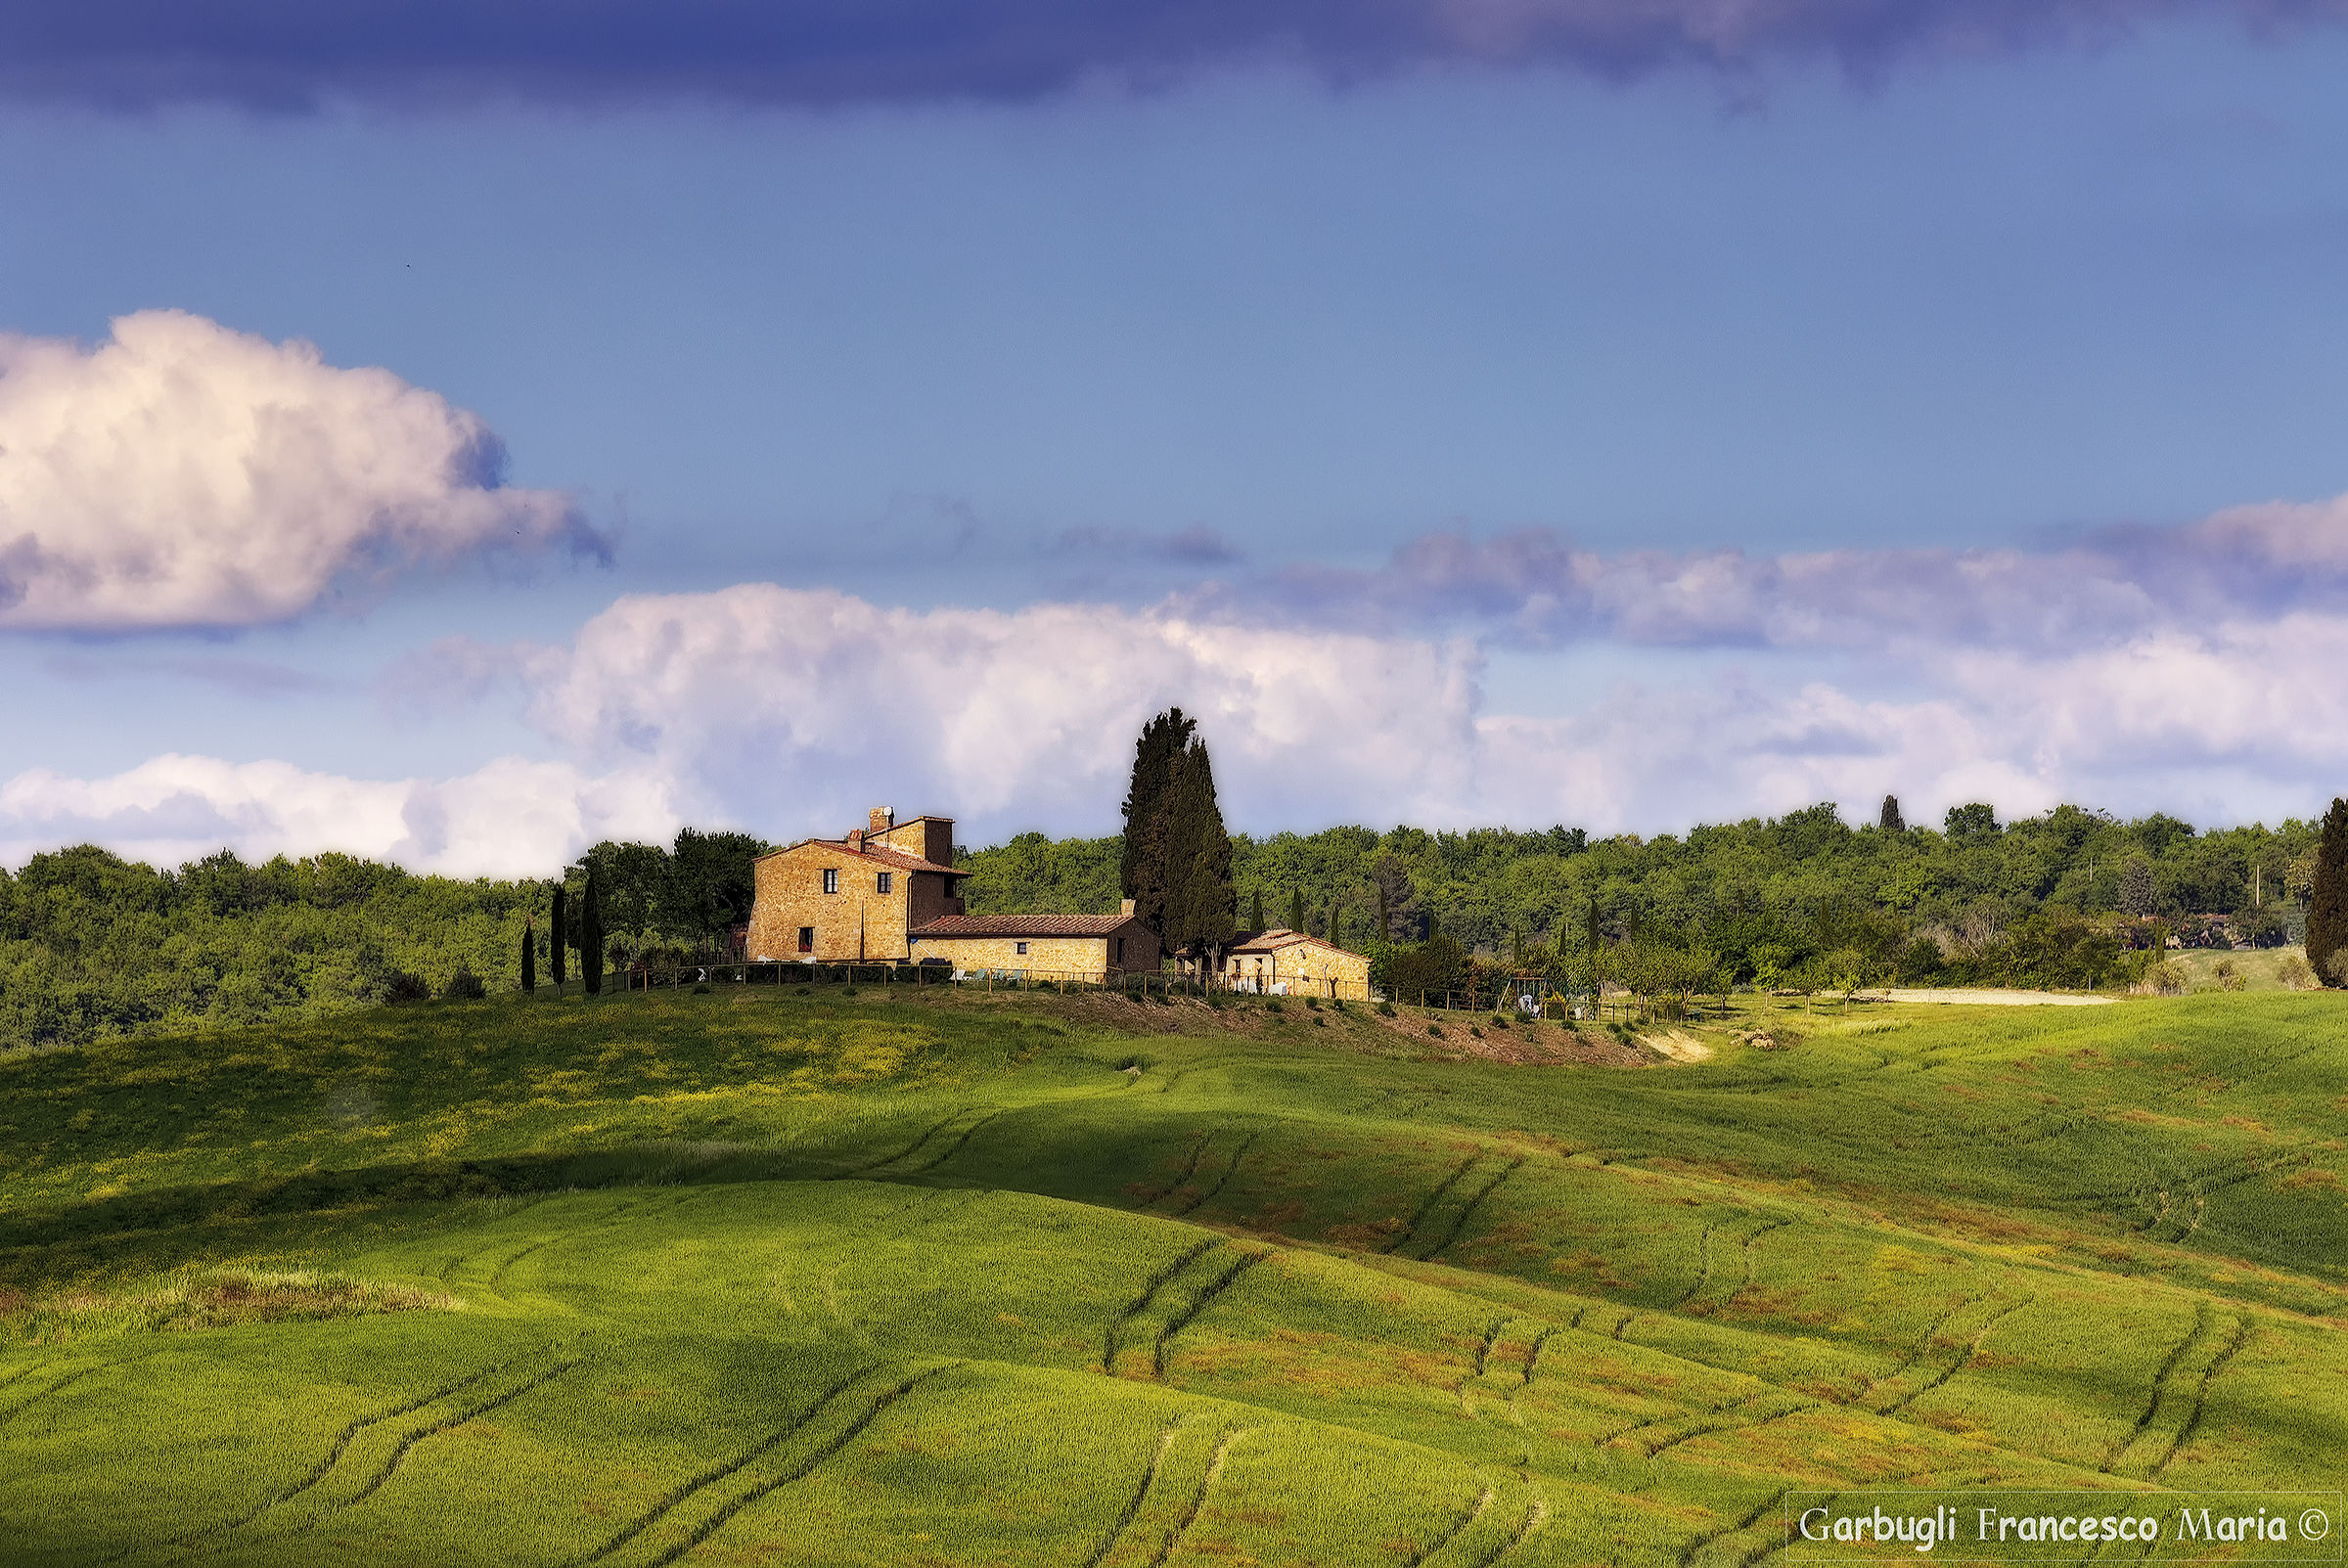 The Tuscan farmhouse...